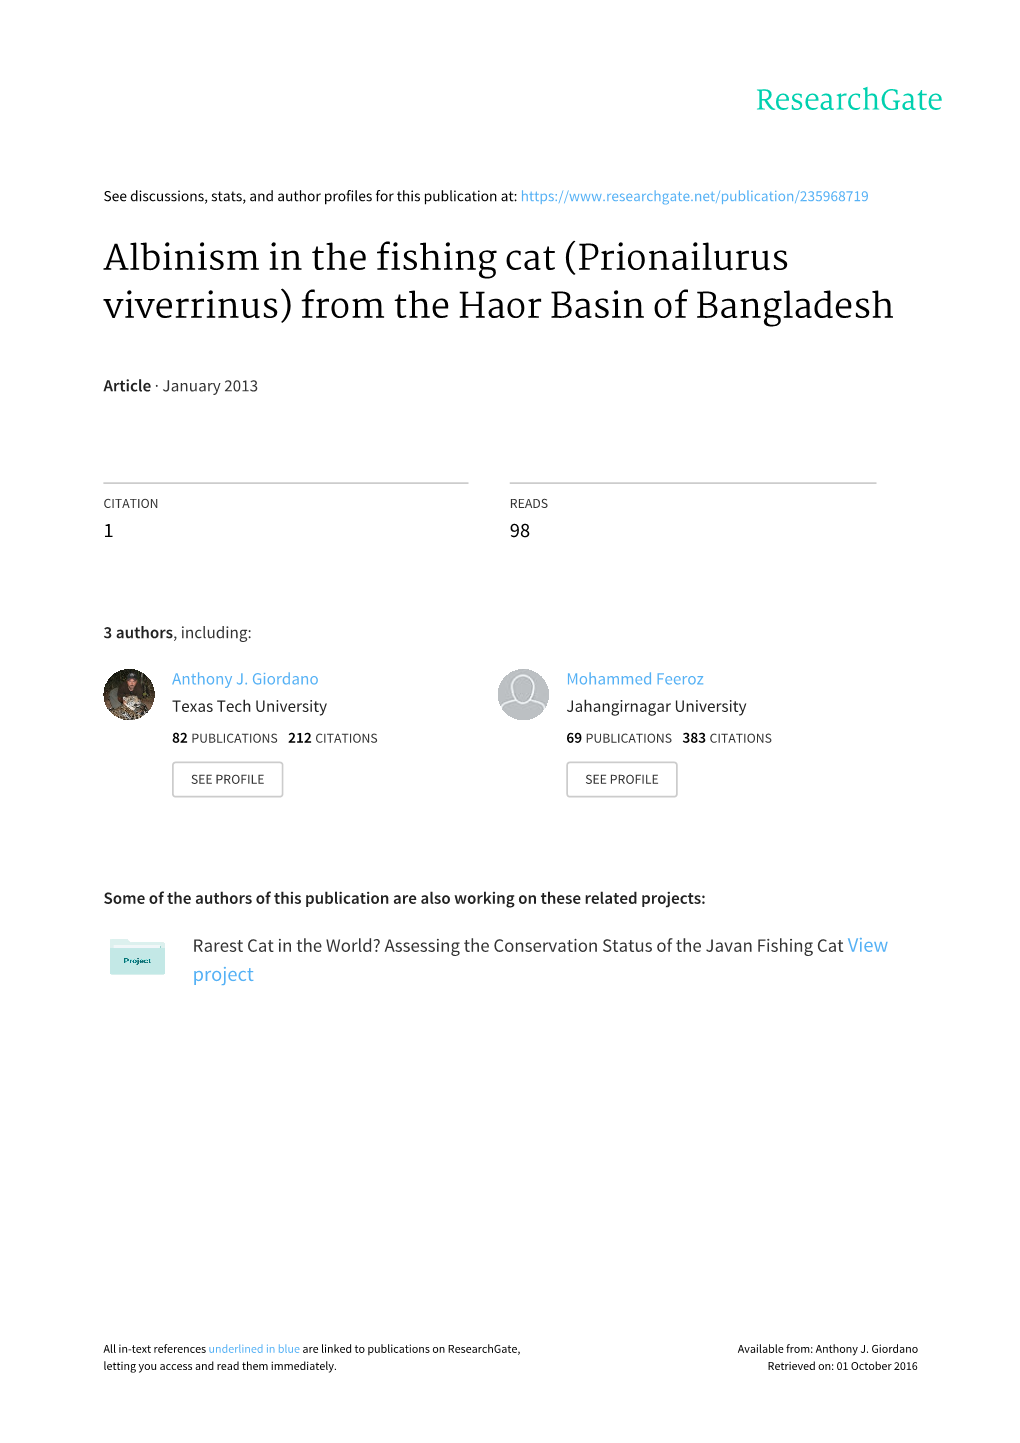 Albinism in the Fishing Cat (Prionailurus Viverrinus) from the Haor Basin of Bangladesh